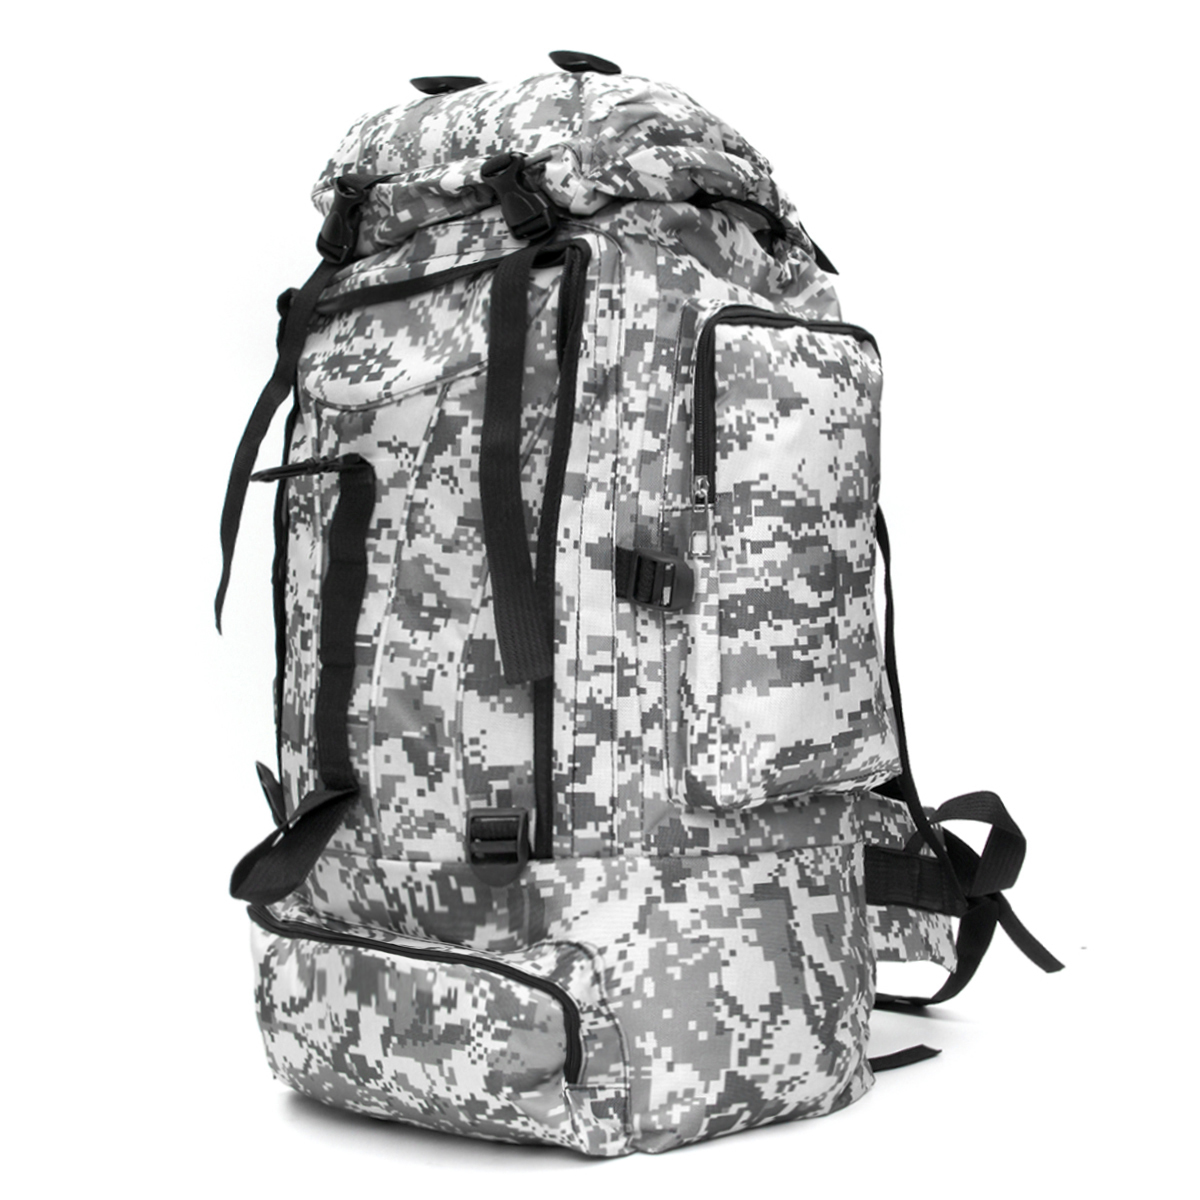 70L-Large-Capacity-Camouflage-Outdoor-Camping-Hiking-Travel-Waterproof-Macbook-Tablet-Storage-Bag-Ba-1856151-11